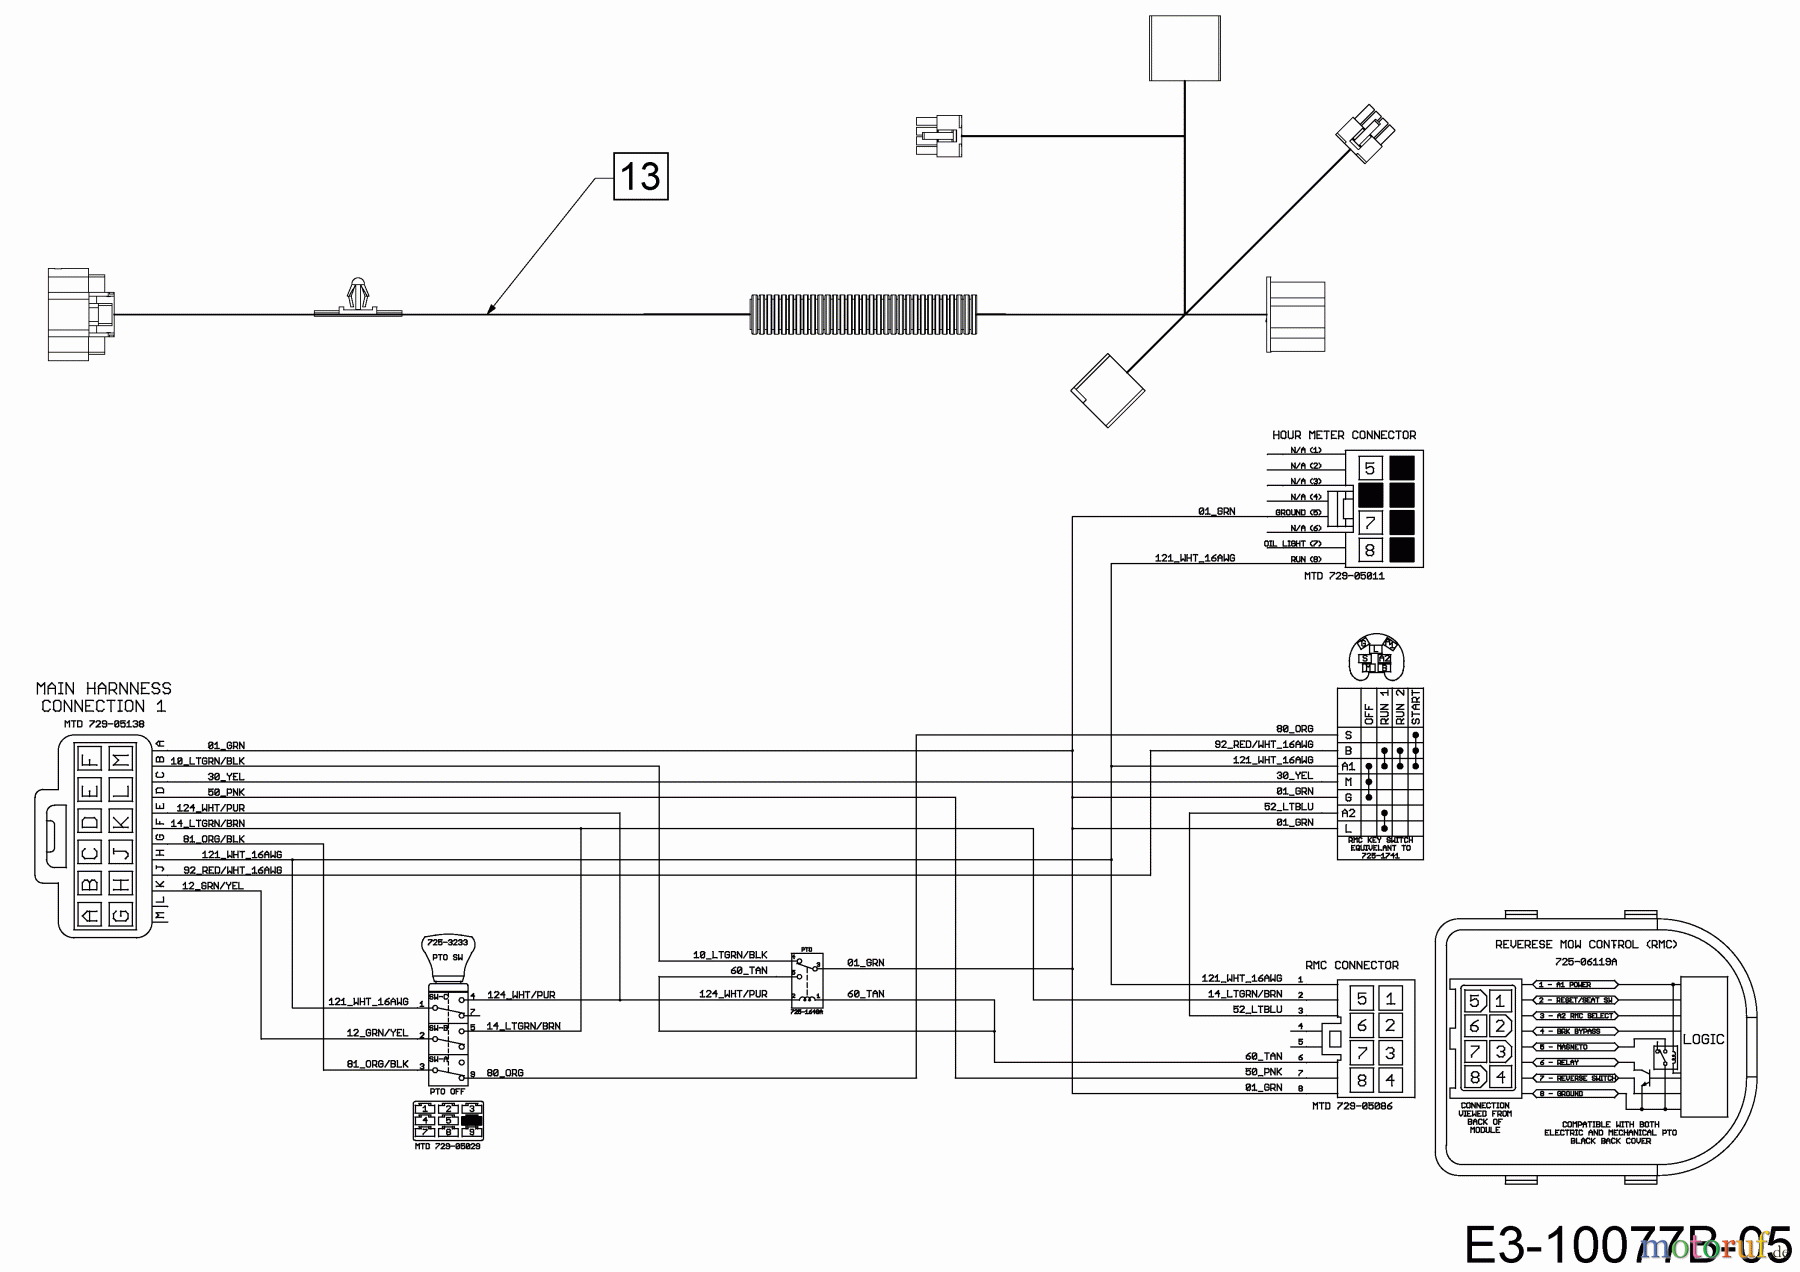  Black Edition Lawn tractors 285-106 TWIN KH 13AIA1KR615  (2019) Wiring diagram dashboard